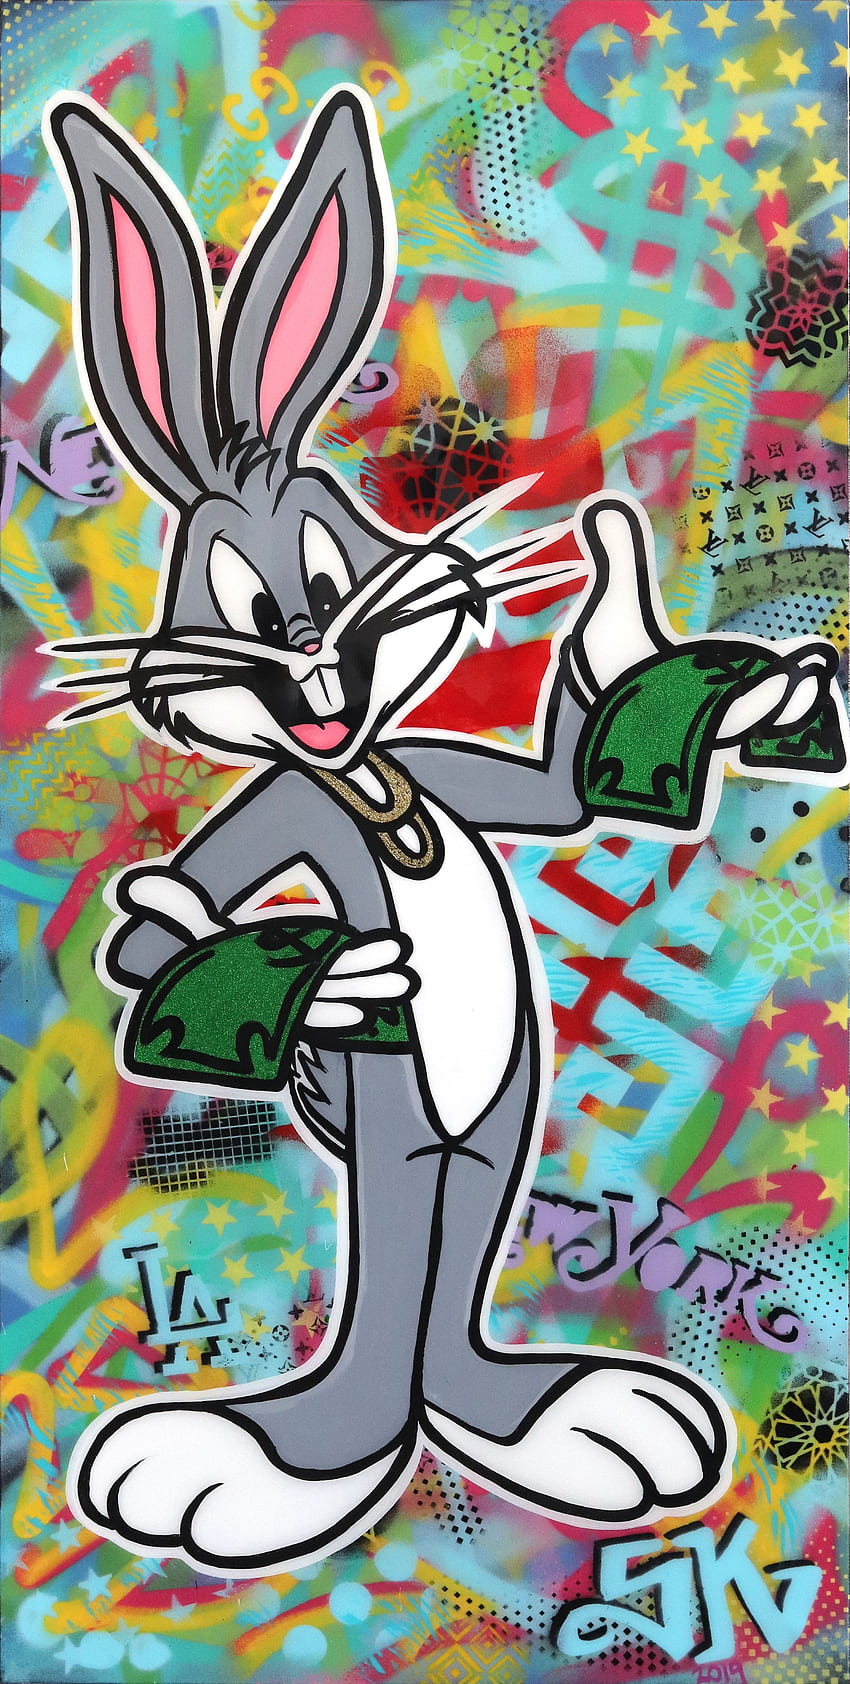 Money bunny. Багз Банни граффити. Багз Банни арт с деньгами. Кролик Багз Банни с деньгами. Багз Банни поп арт.